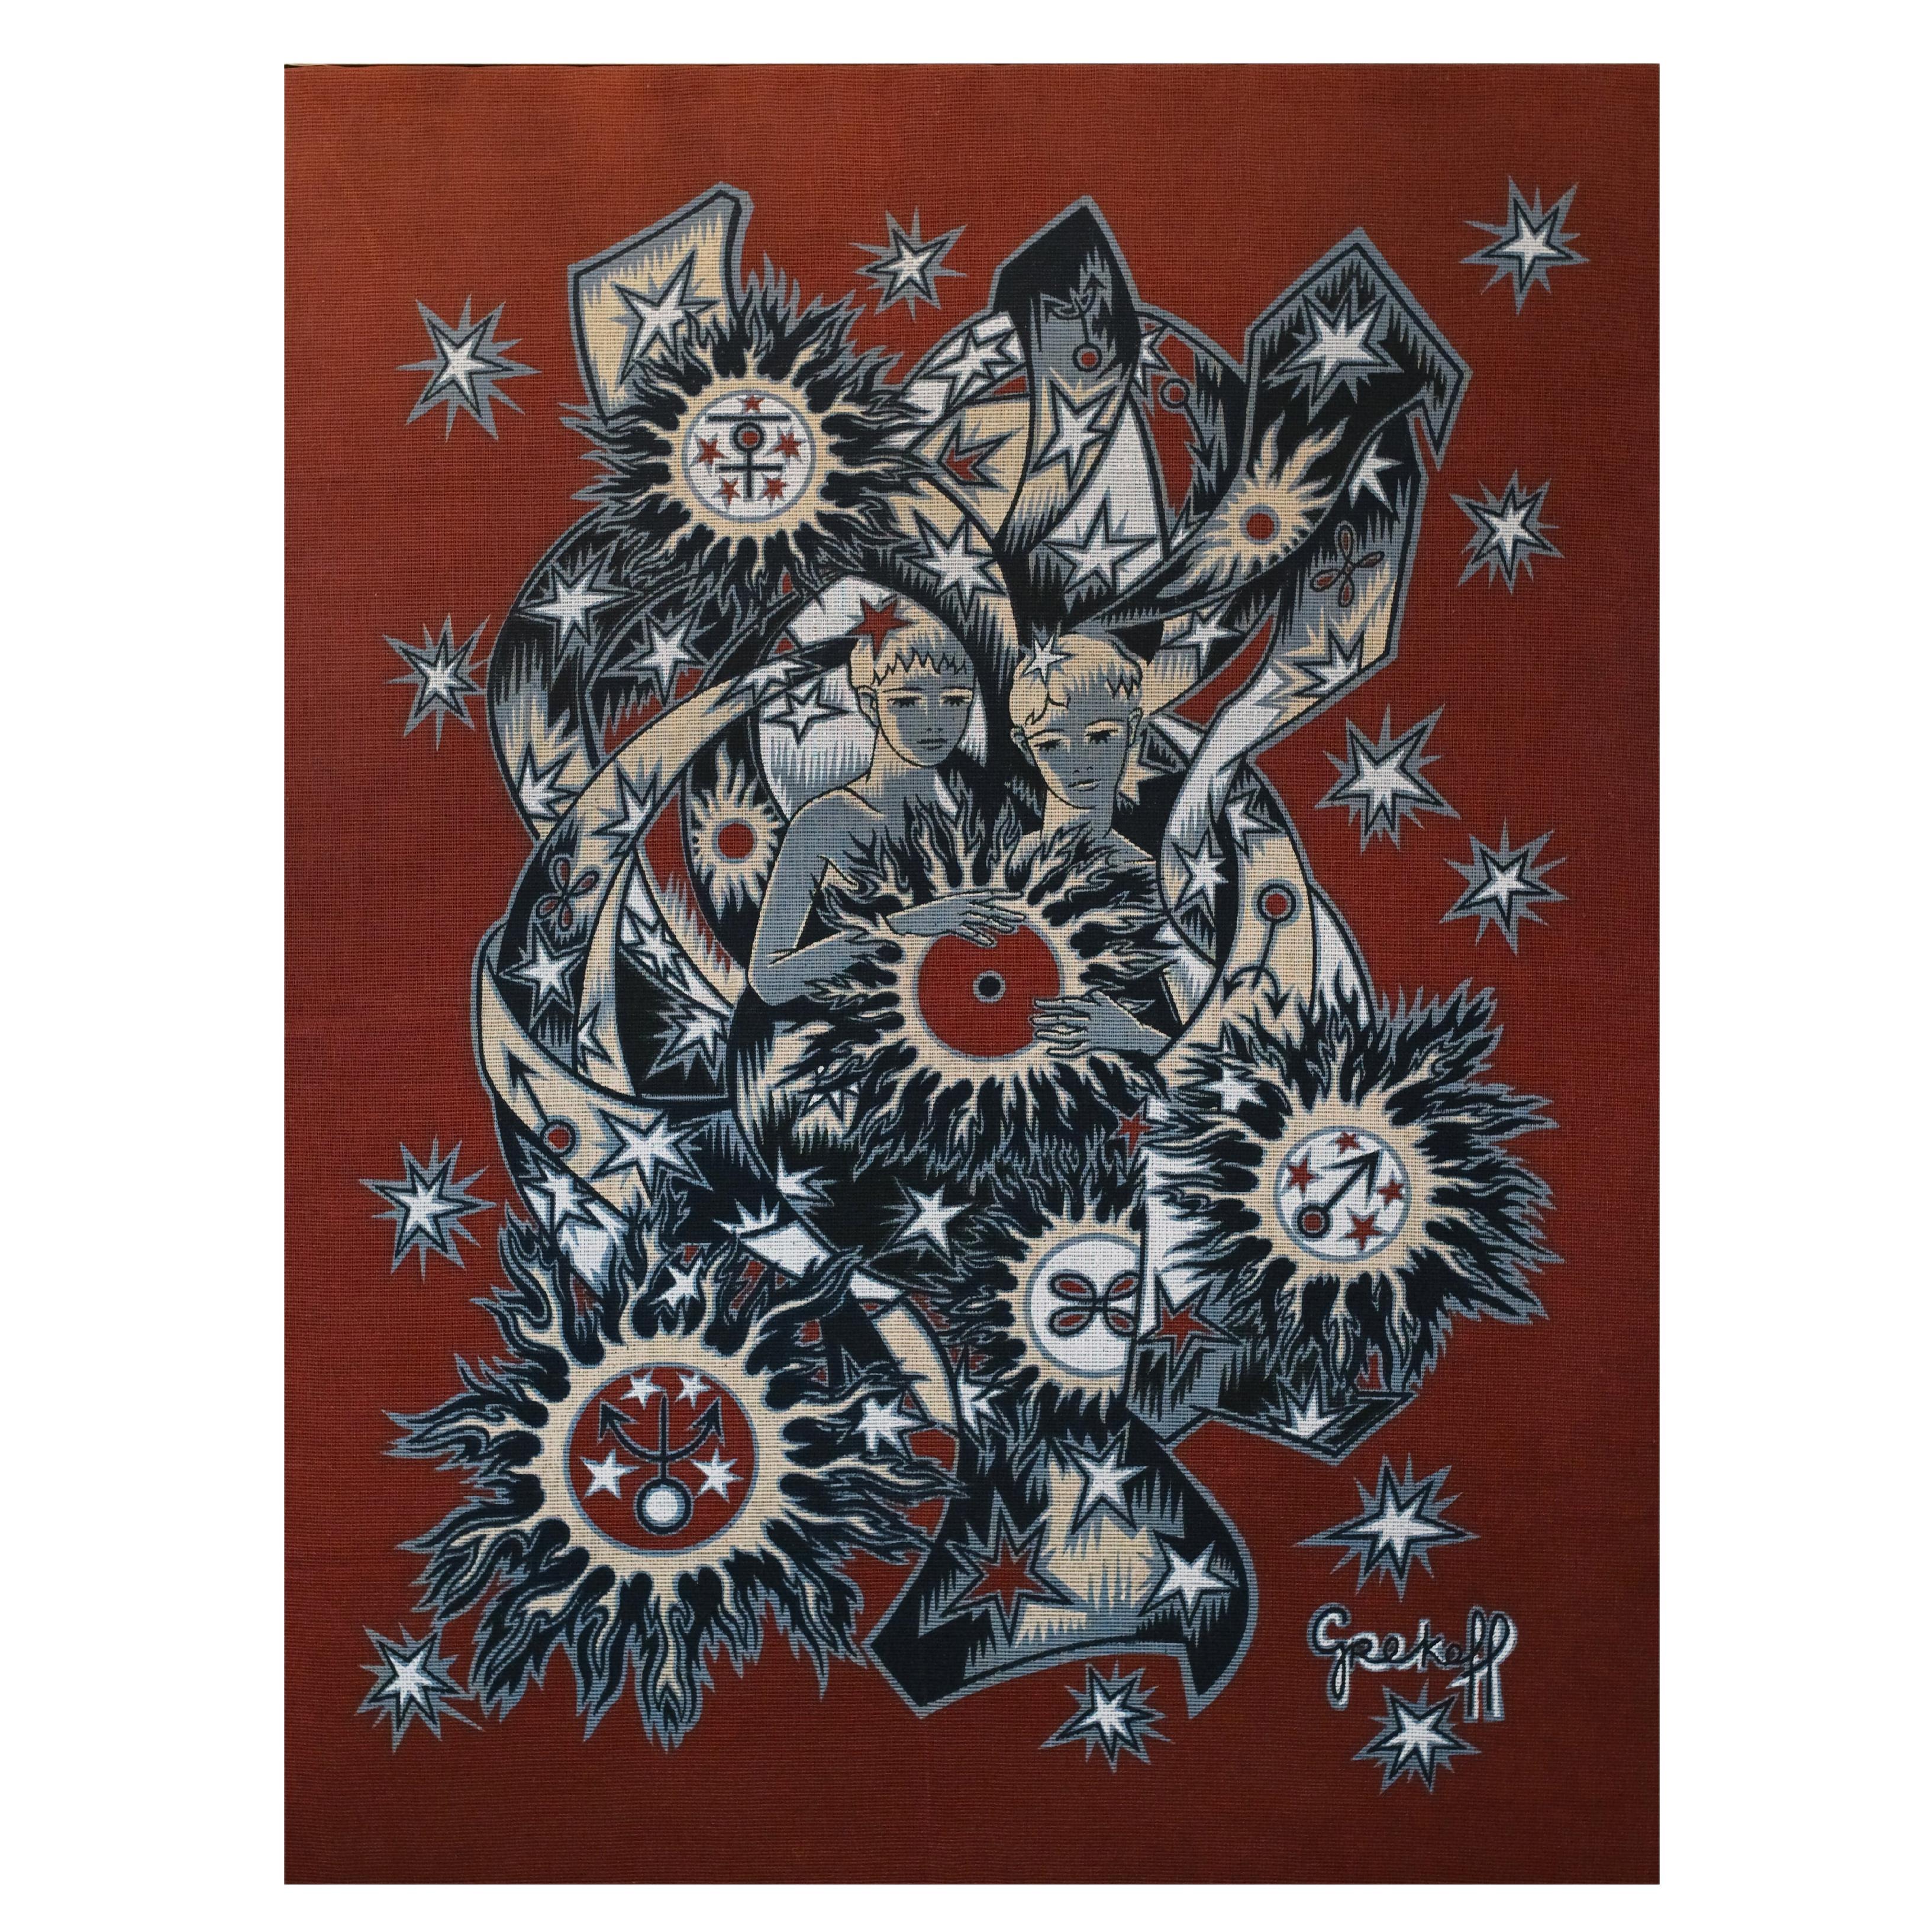 Framed Elie Grekoff Cartoon Tapestry "Les Gemeaux"